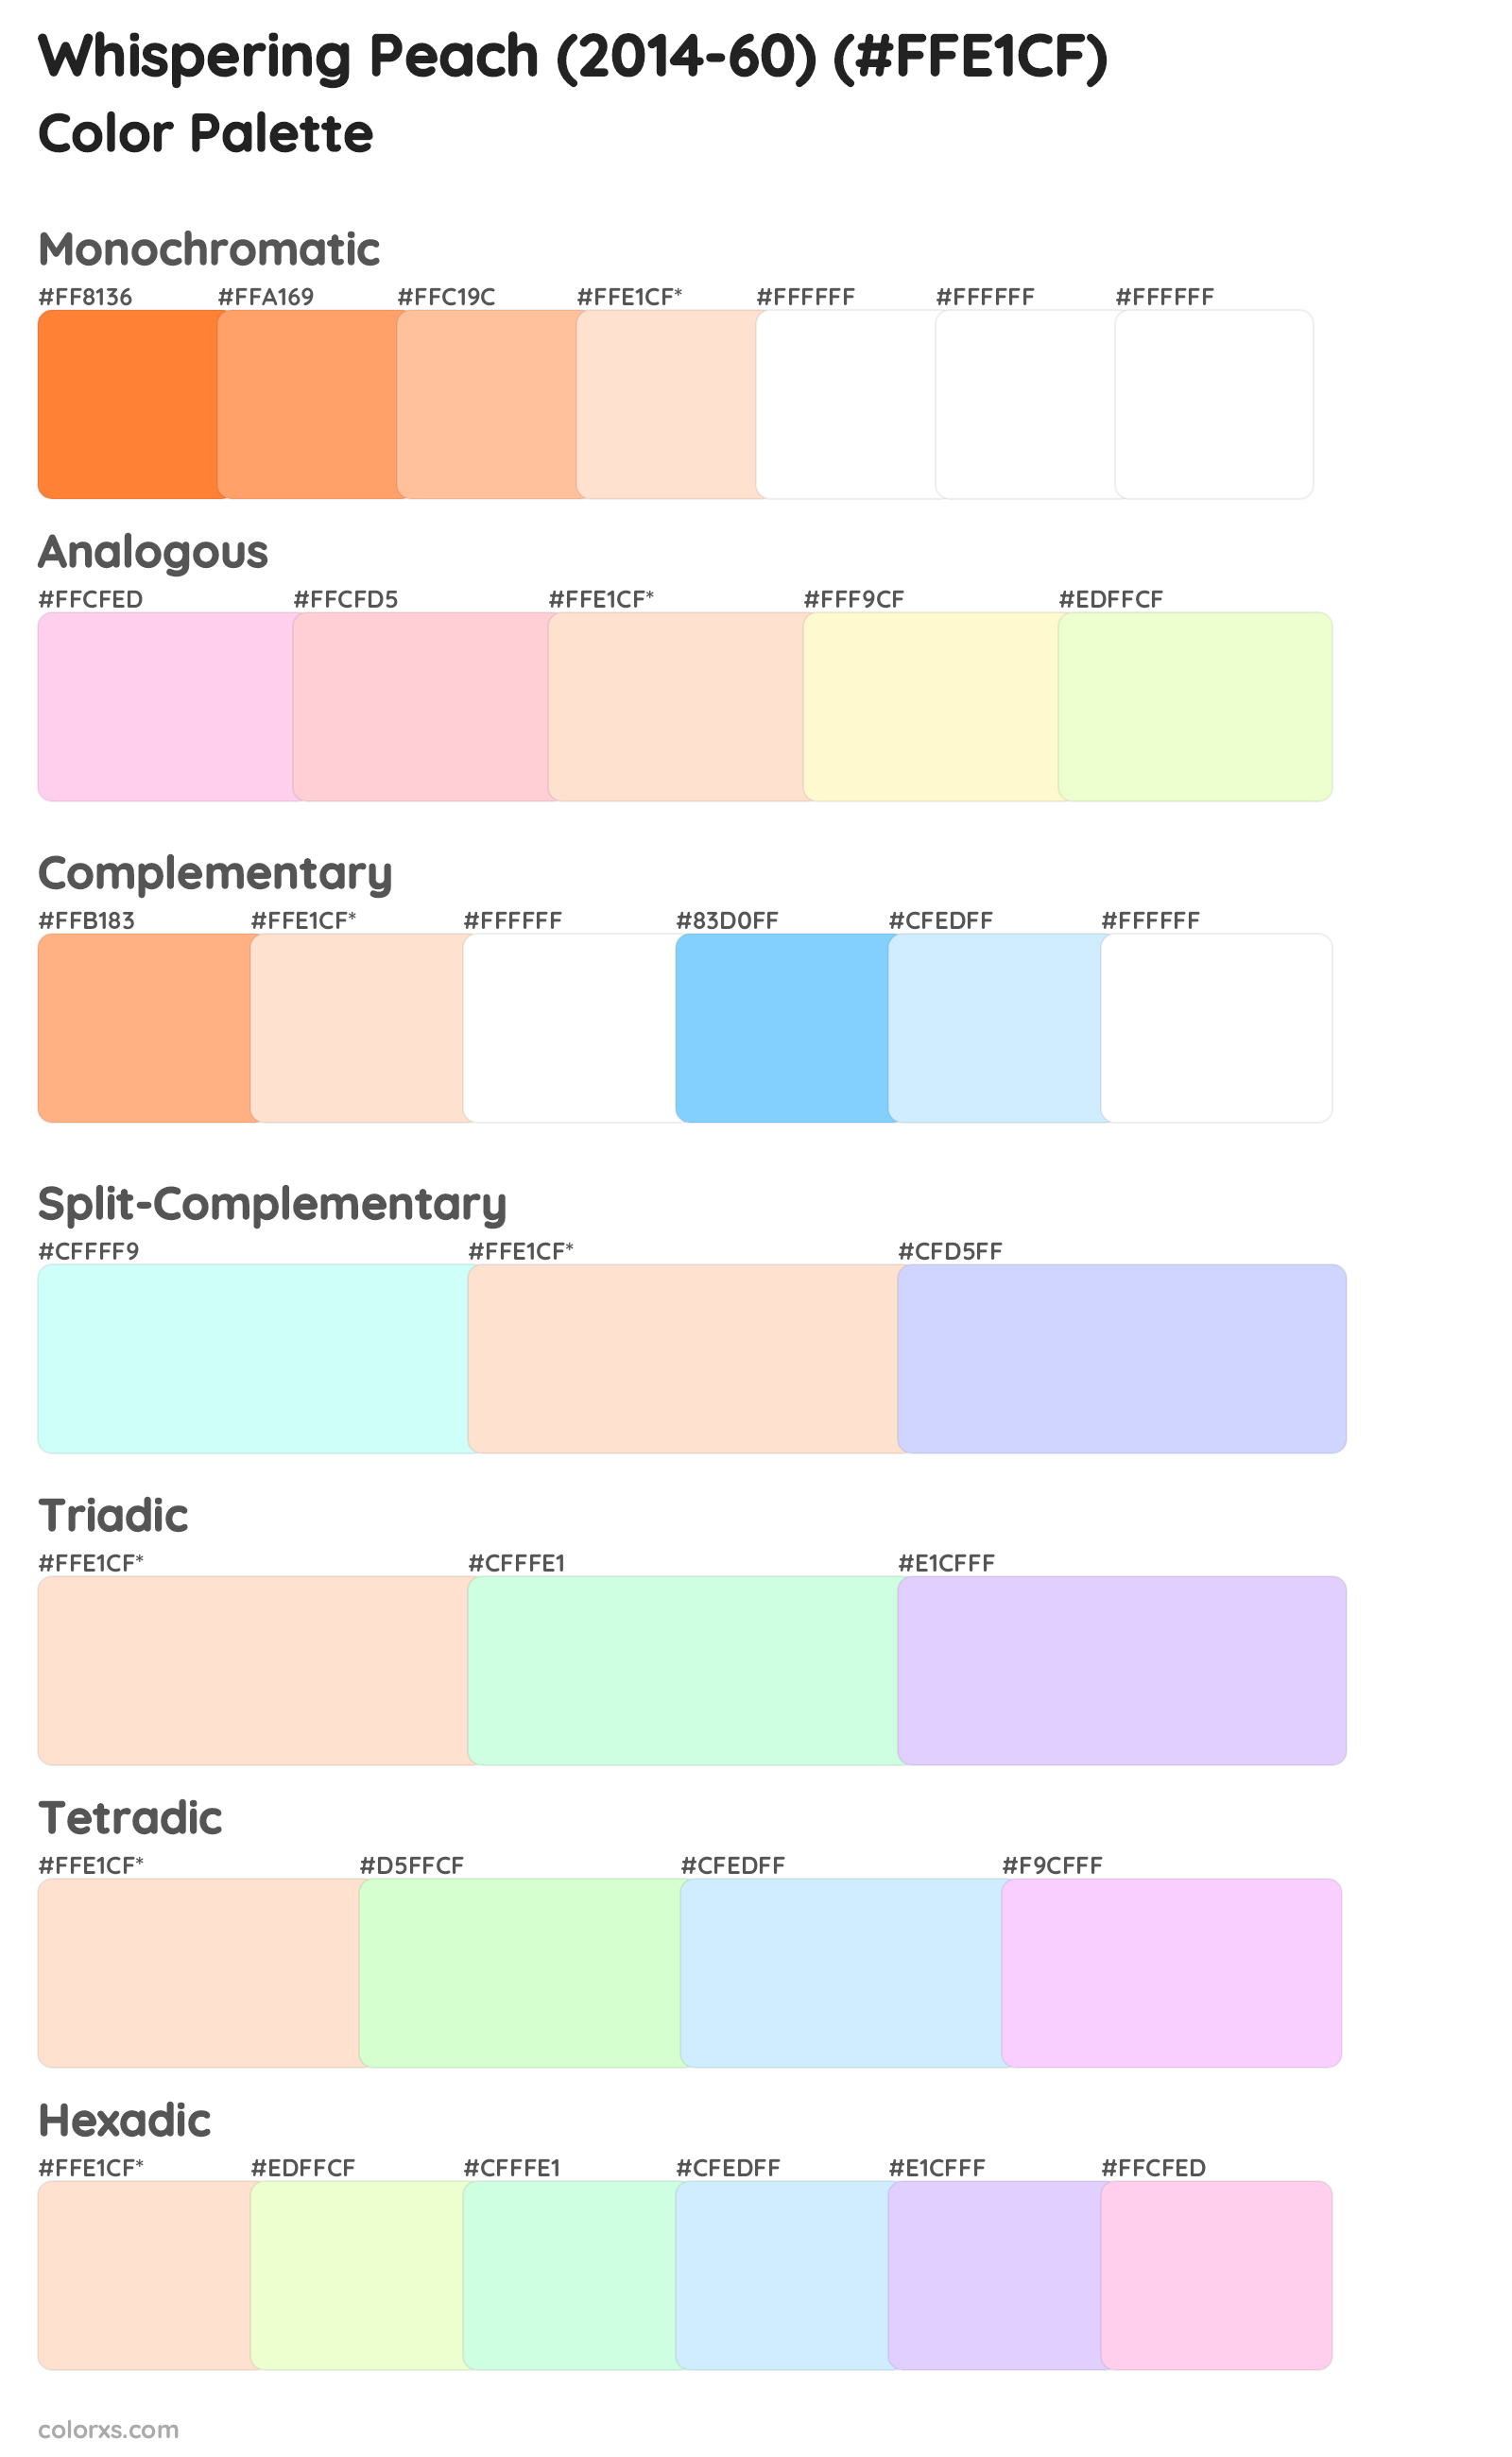 Whispering Peach (2014-60) Color Scheme Palettes